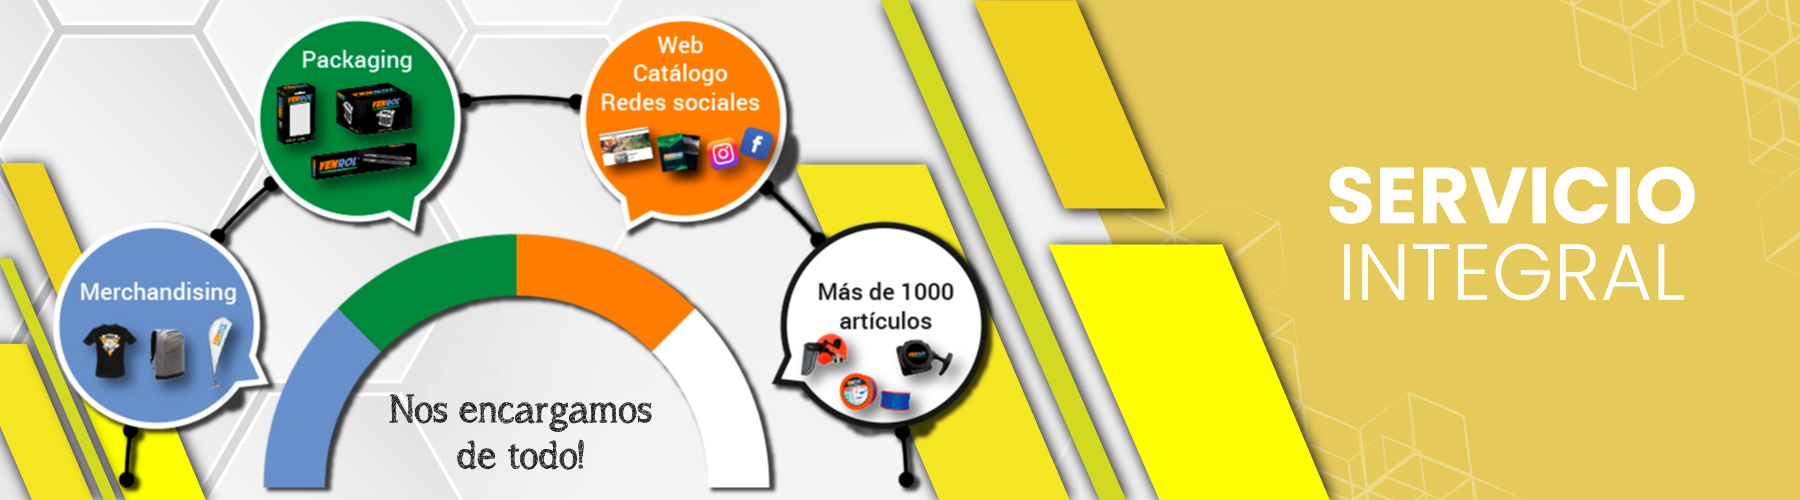 slides-web-venrol-company-servicio-integral